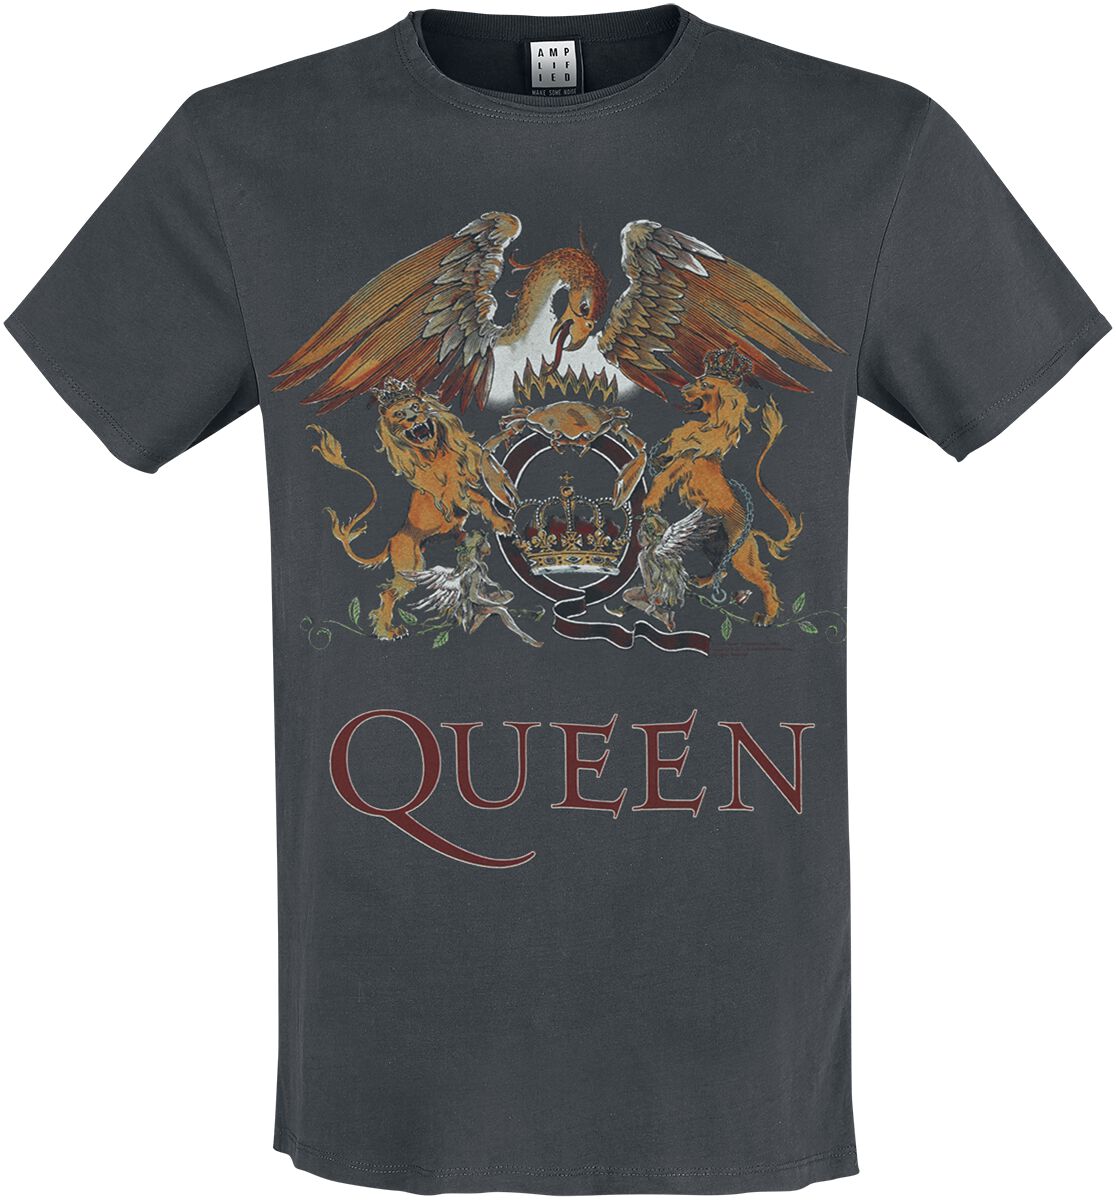 Queen T-Shirt - Amplified Collection - Royal Crest - XXL - für Männer - Größe XXL - charcoal  - Lizenziertes Merchandise!